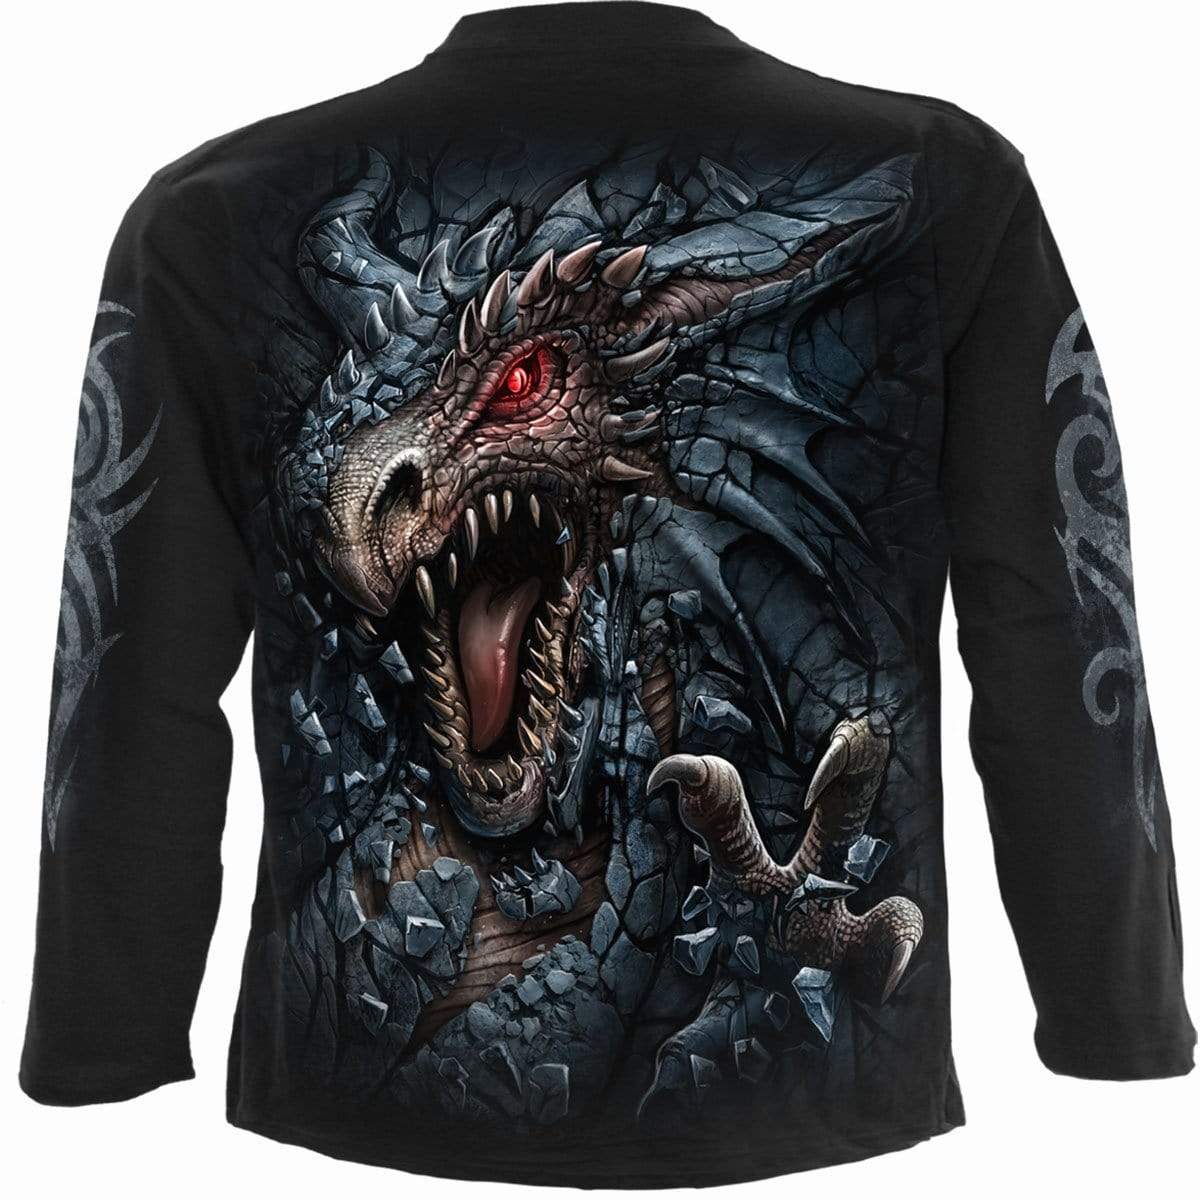 DRAGON'S LAIR - Longsleeve T-Shirt Black - Spiral USA